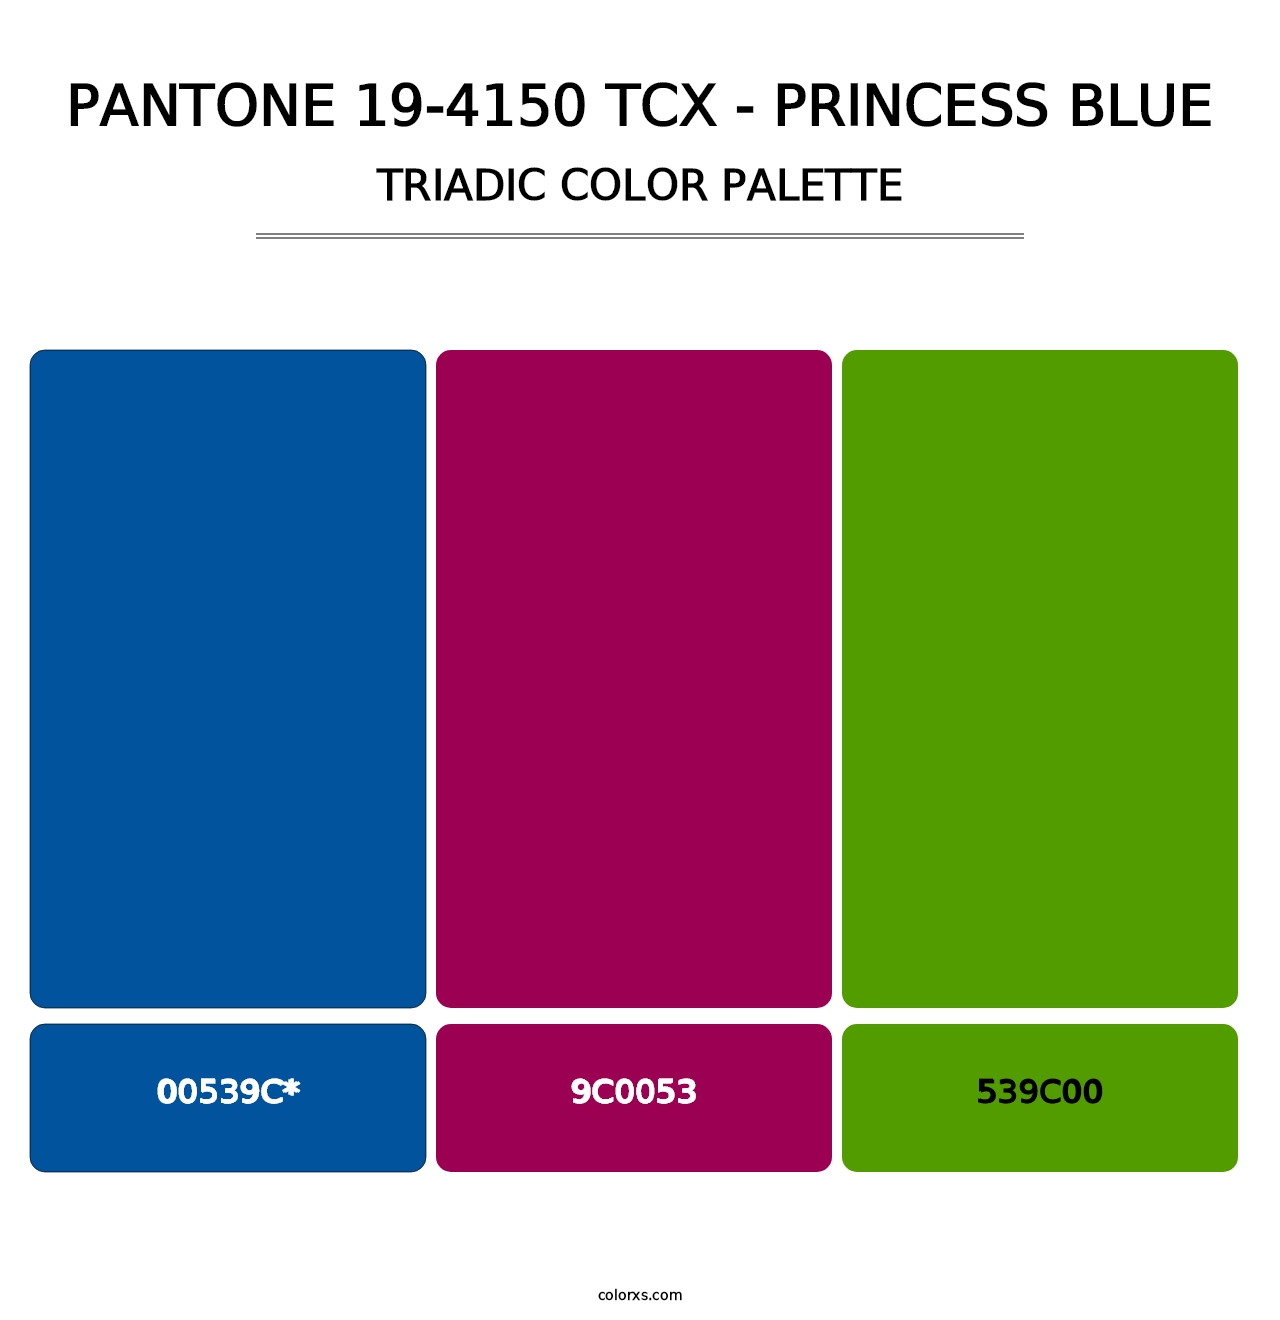 PANTONE 19-4150 TCX - Princess Blue - Triadic Color Palette